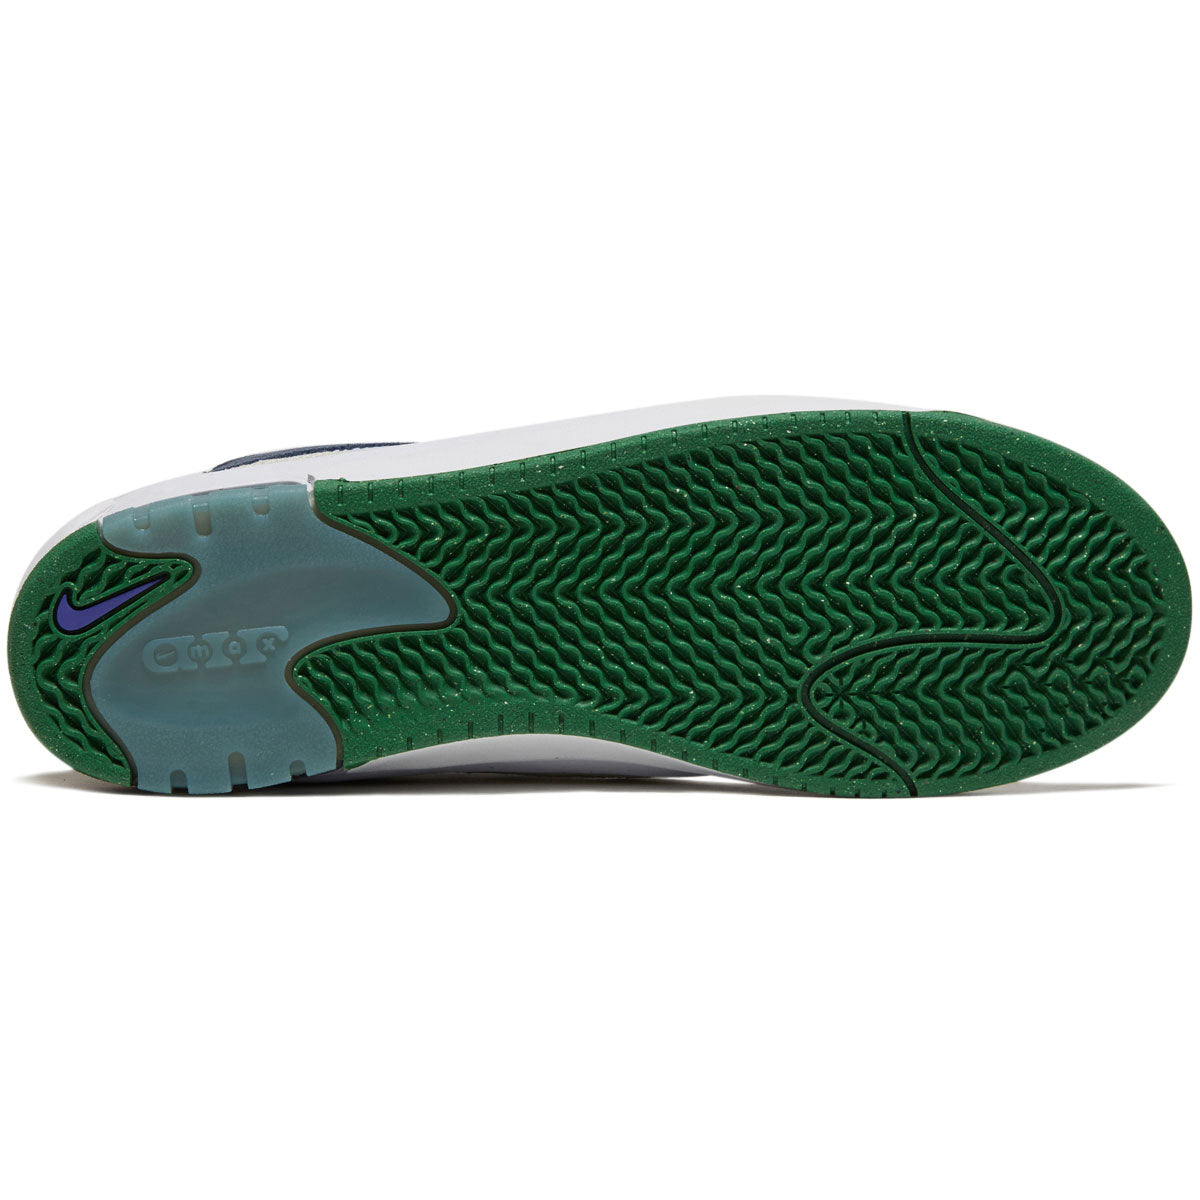 Nike SB Air Max Ishod Shoes - White/Persian Violet/Obsidian/Pine Green image 4